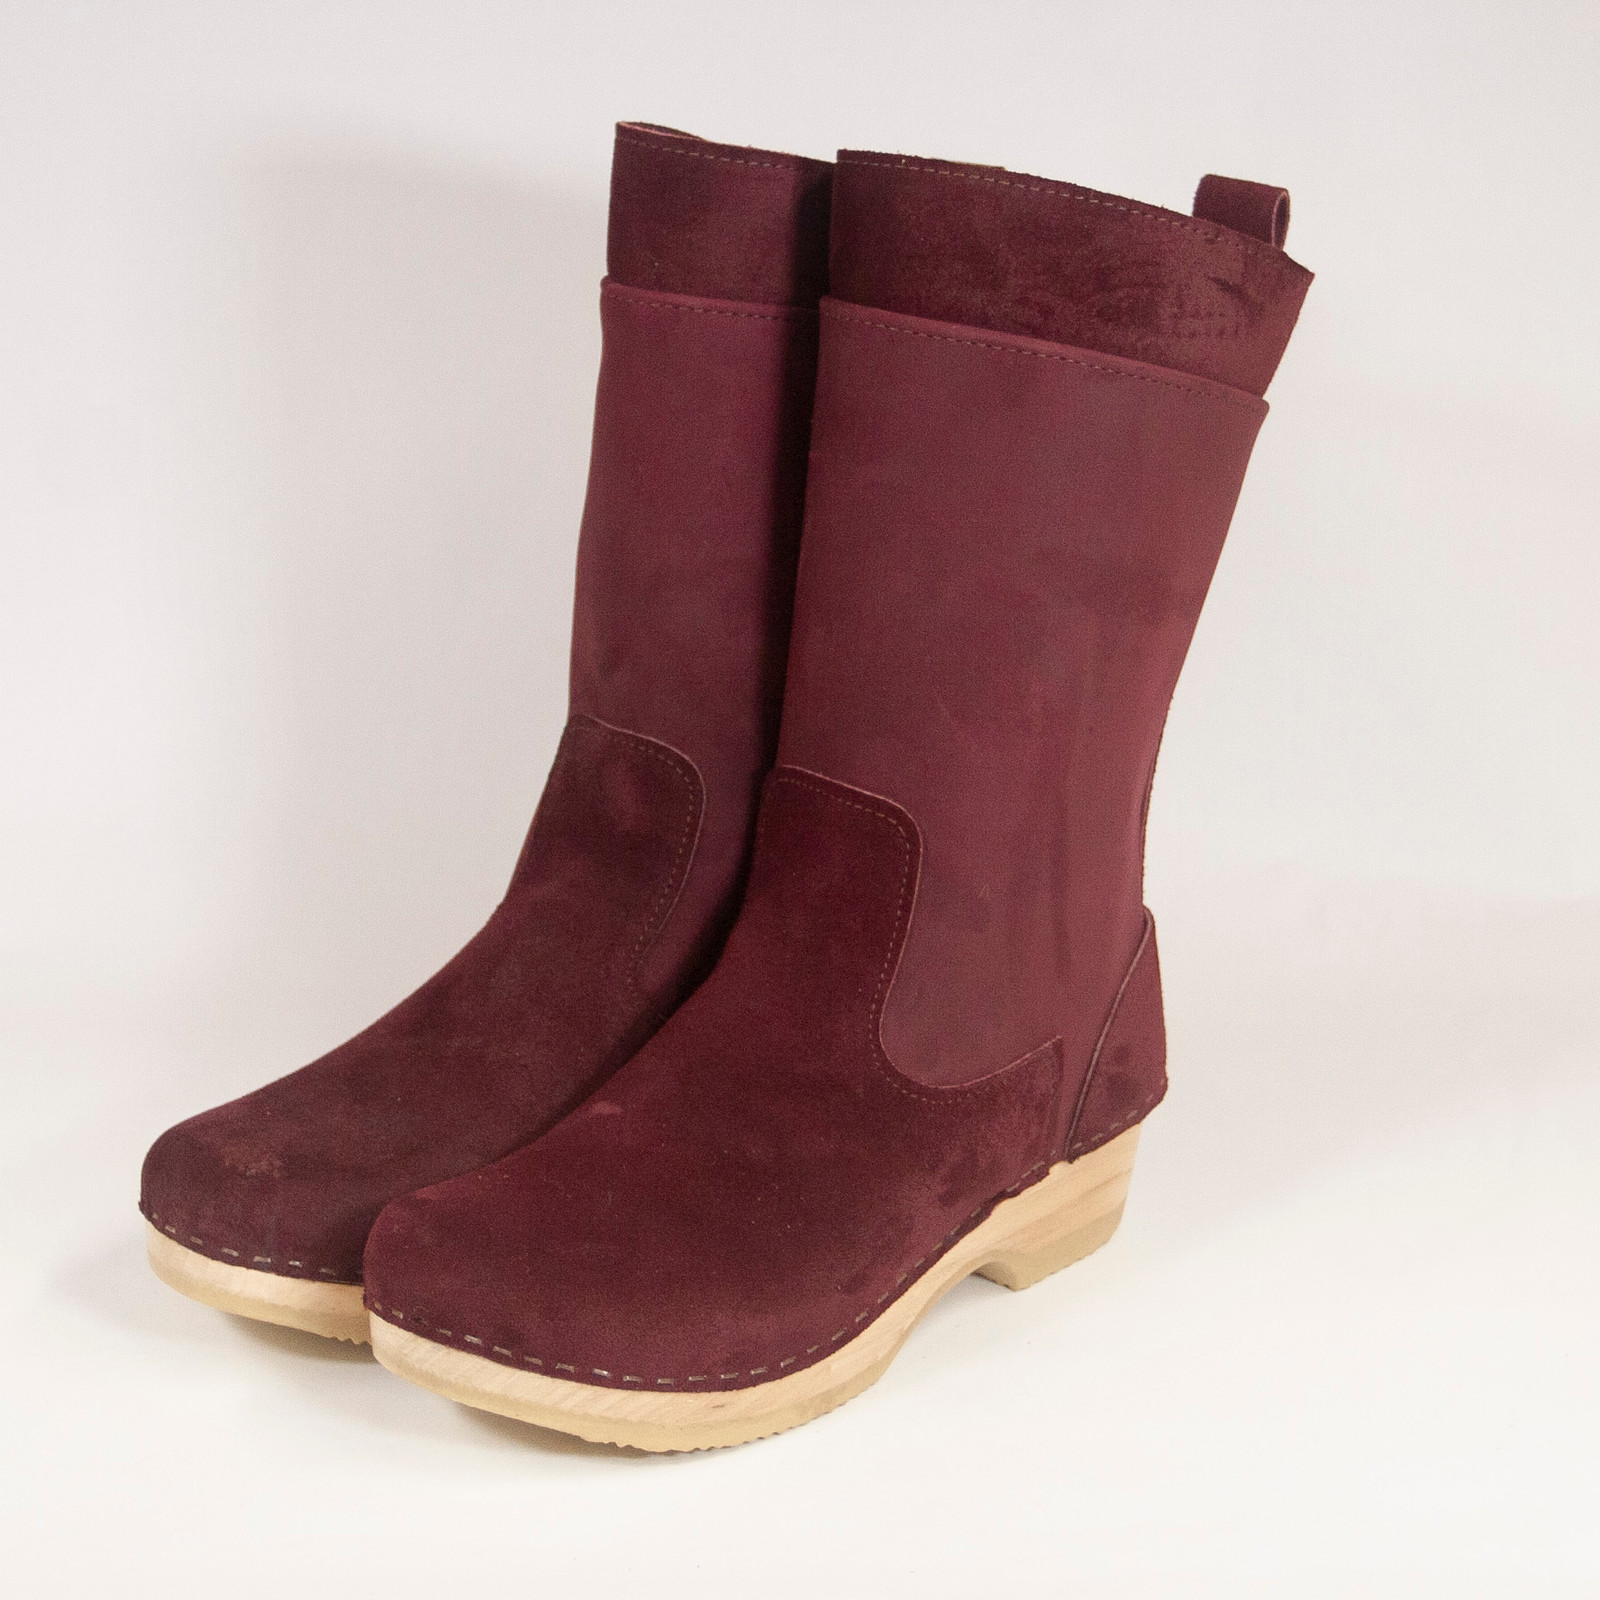 April Clog Boots - Mahogany - All Leather